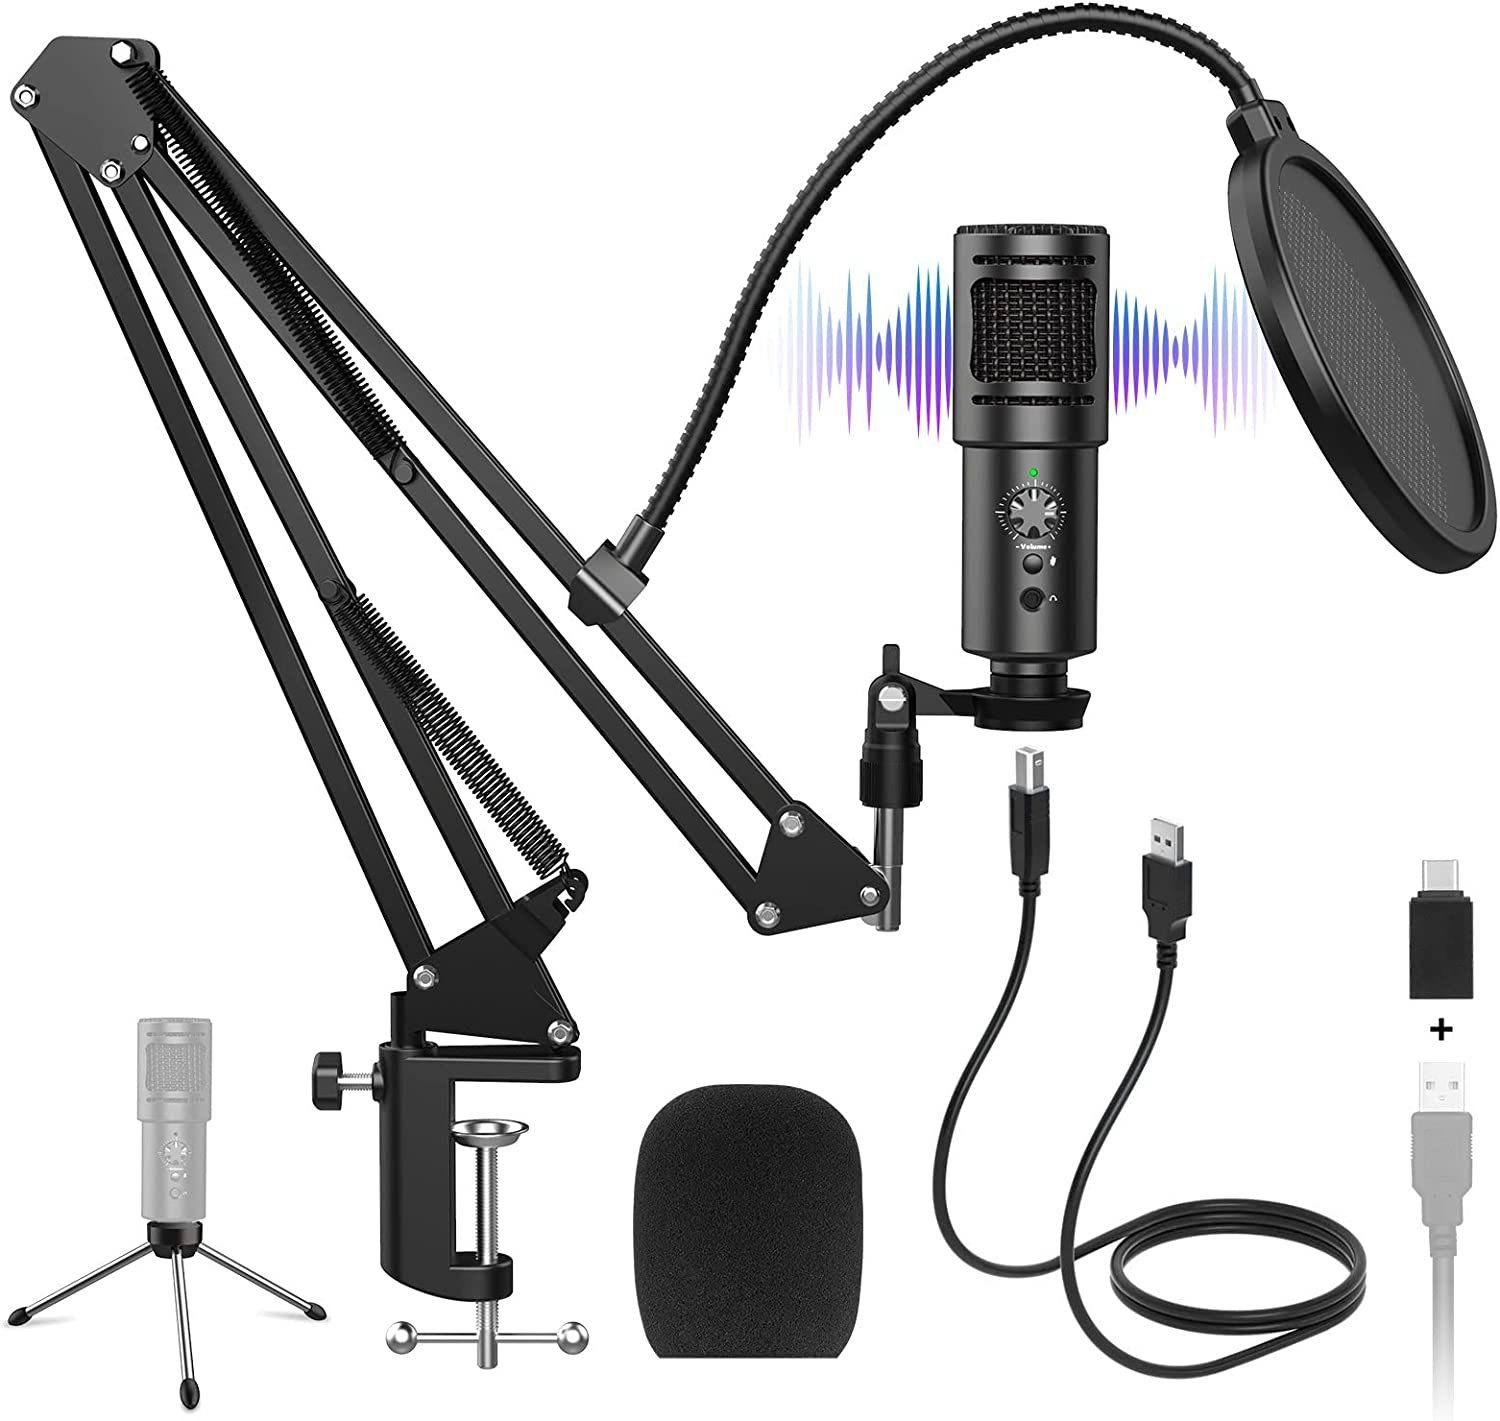 Nimaso Streaming-Mikrofon USB Mikrofon-Kit - Kristallklare Aufnahmen für Podcasts, Streams&mehr (Komplett-Set), 16mm Membran, Plug & Play, Nierencharakteristik, robustes Design